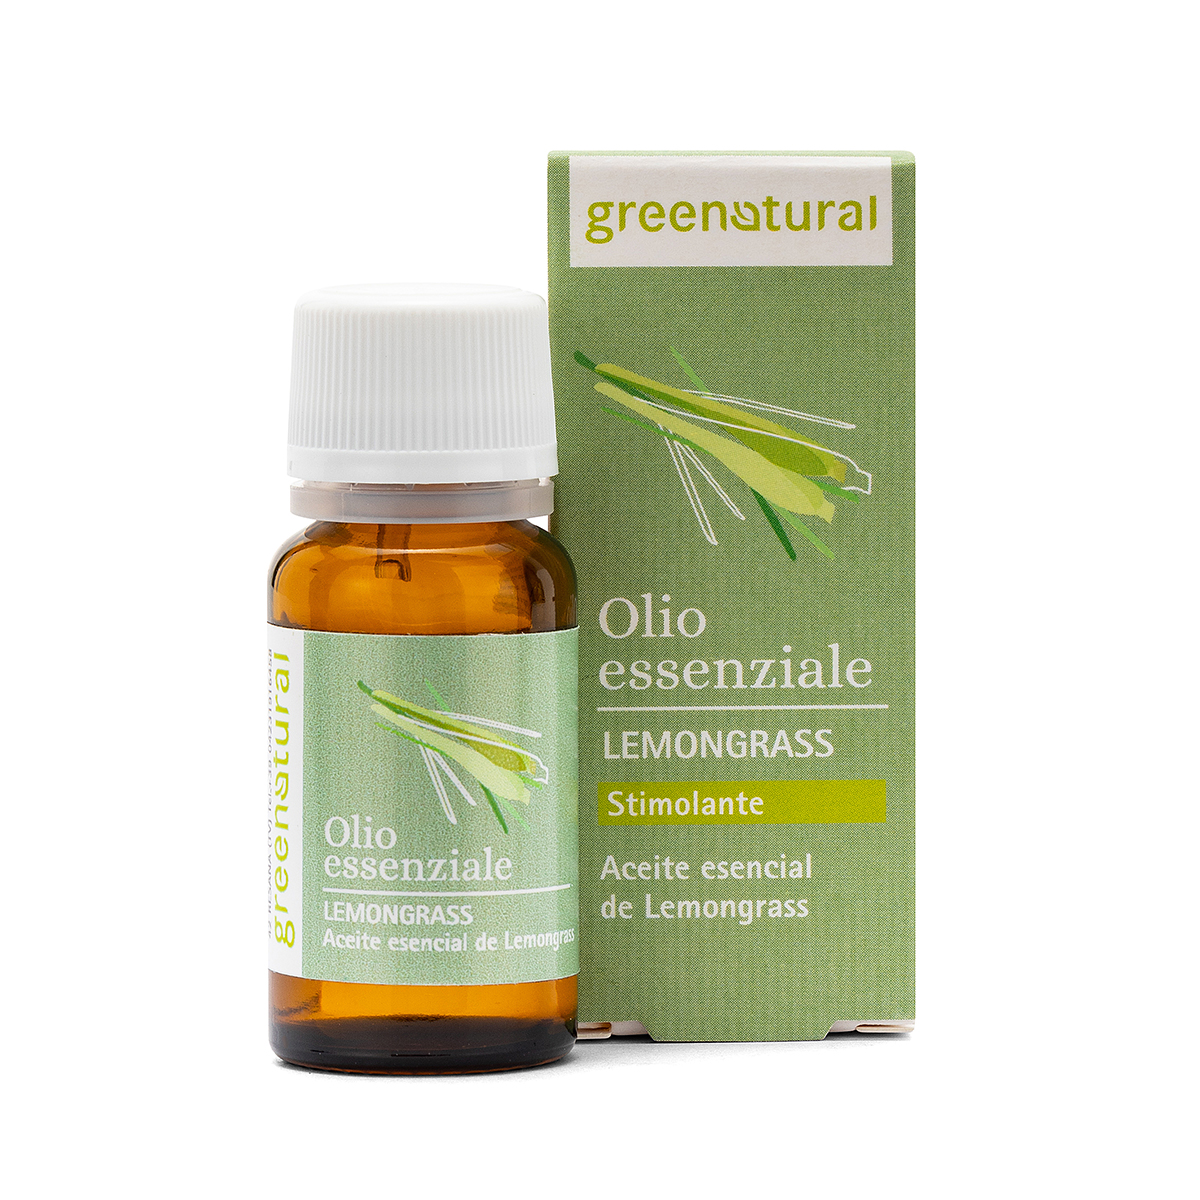 Olio Essenziale Lemongrass Stimolante -  10ml, , large